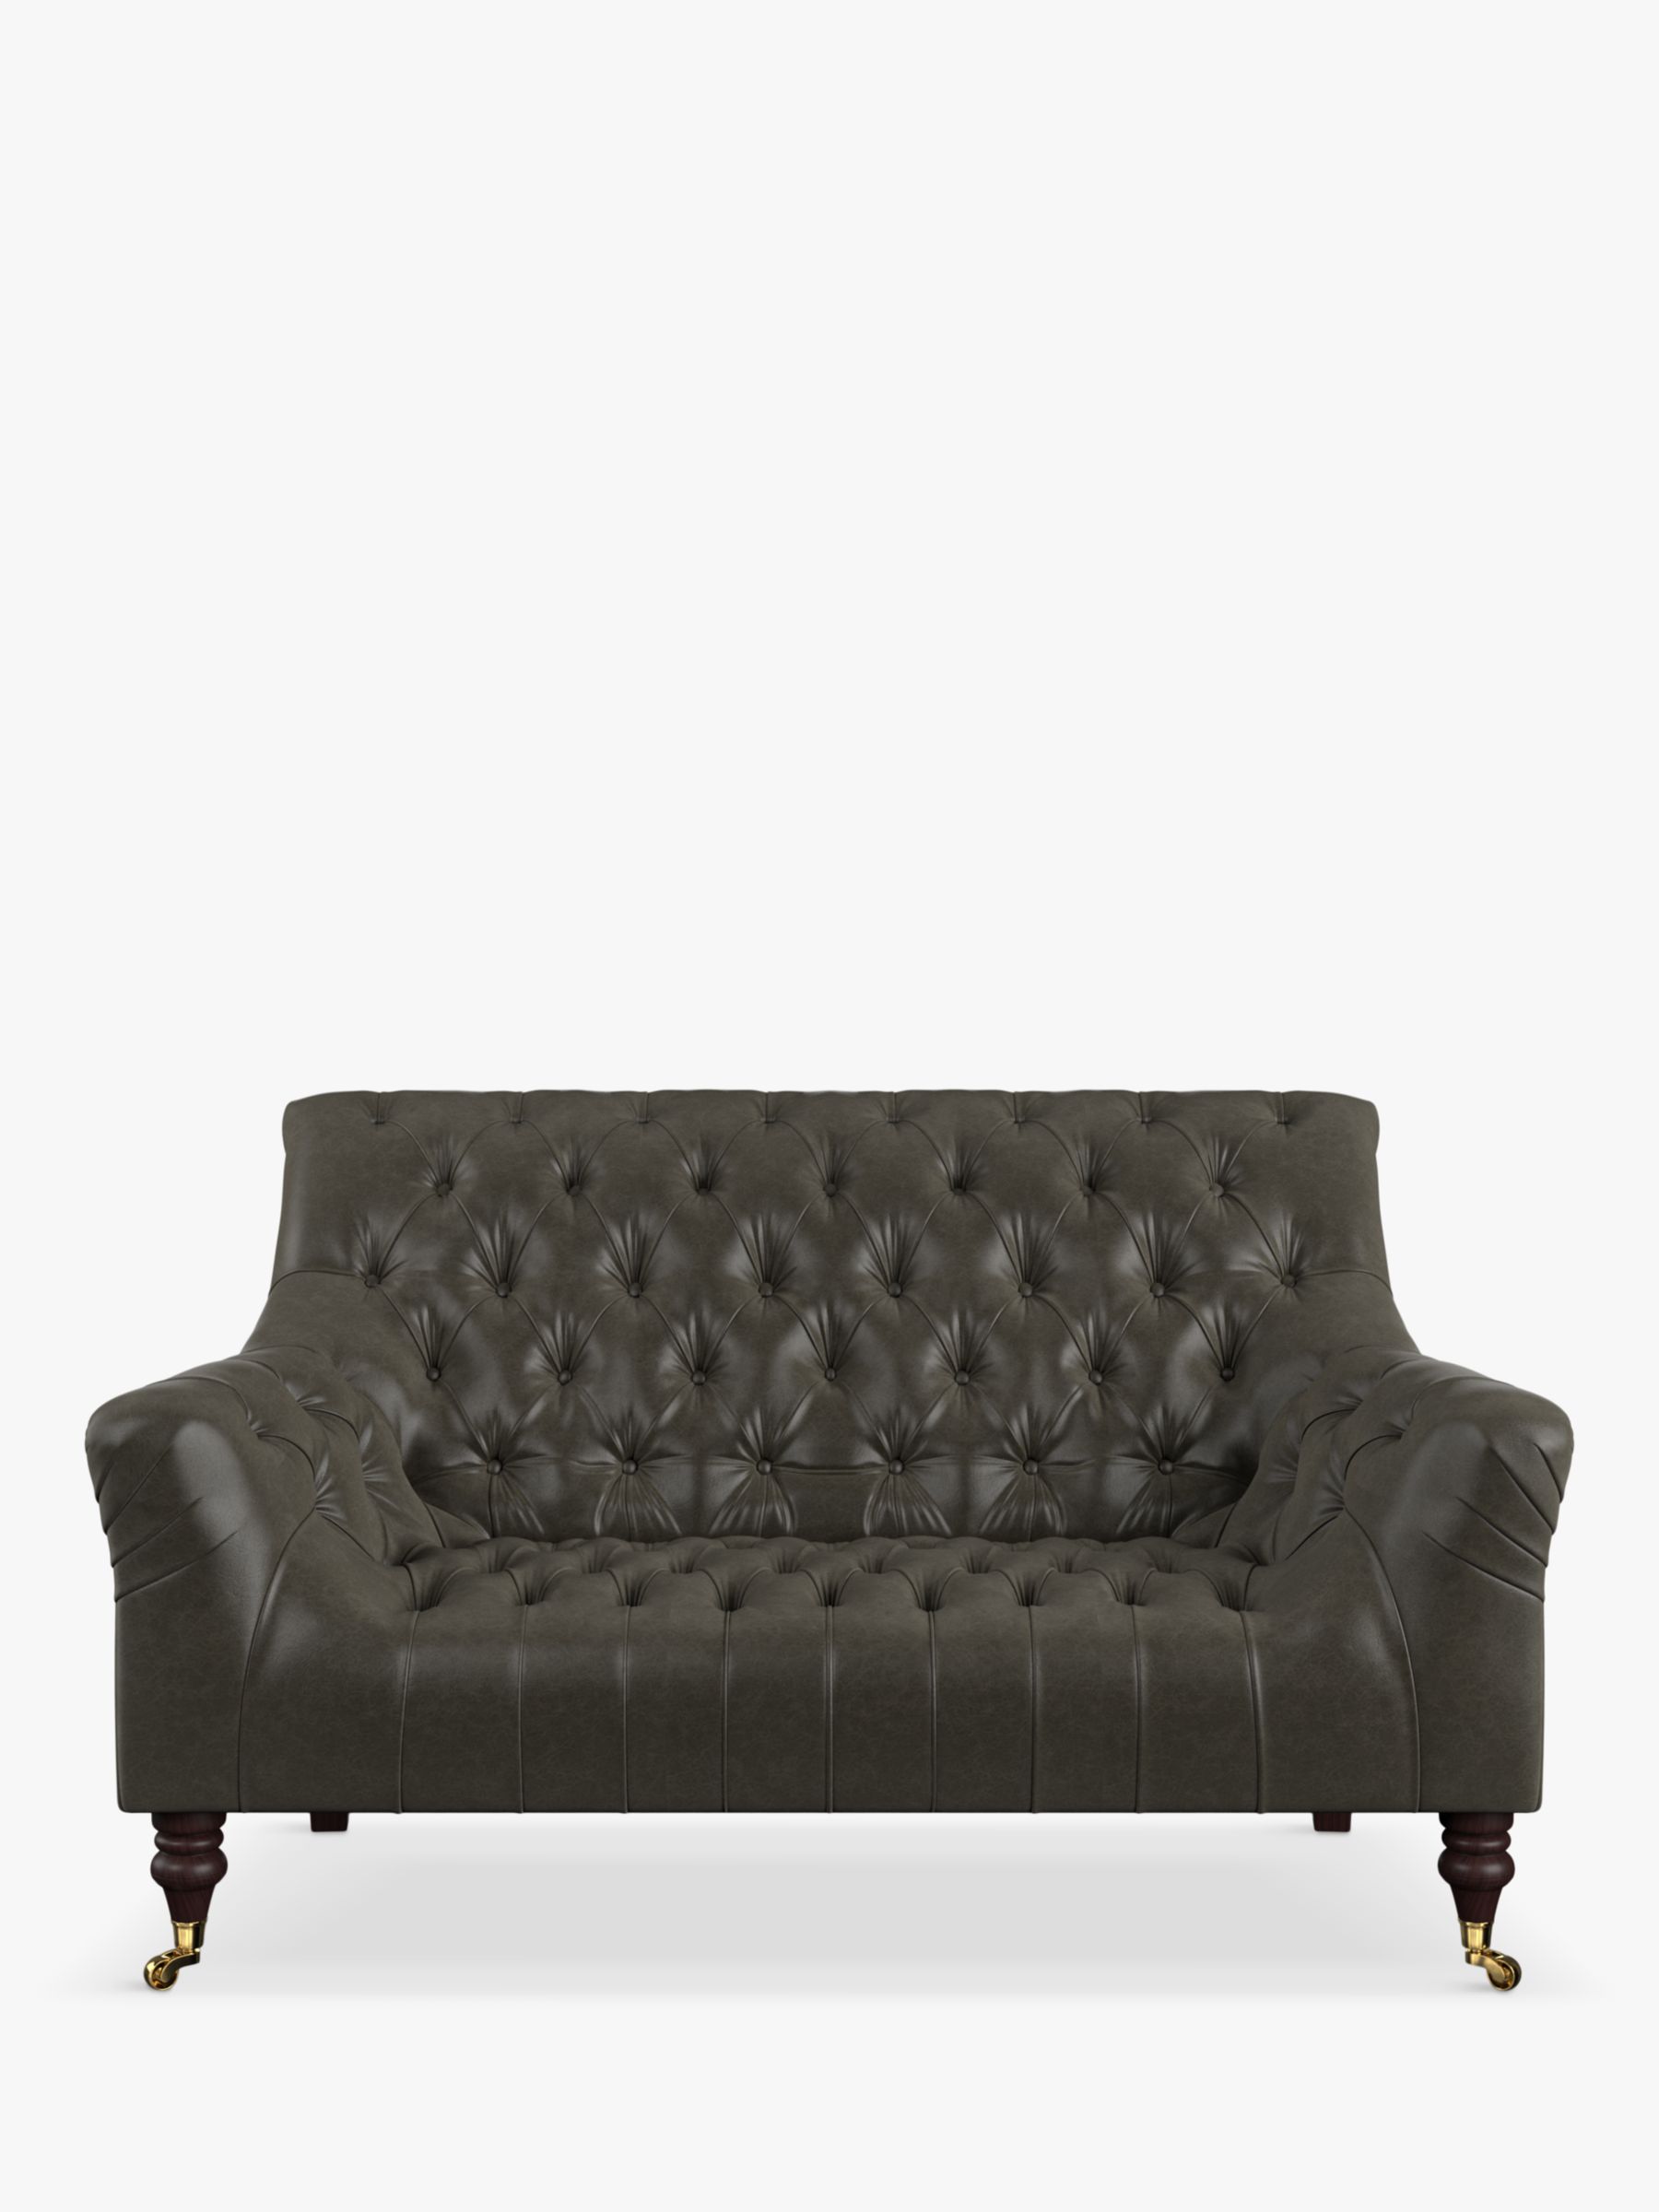 Tetrad Skittle Petite 2 Seater Leather Sofa